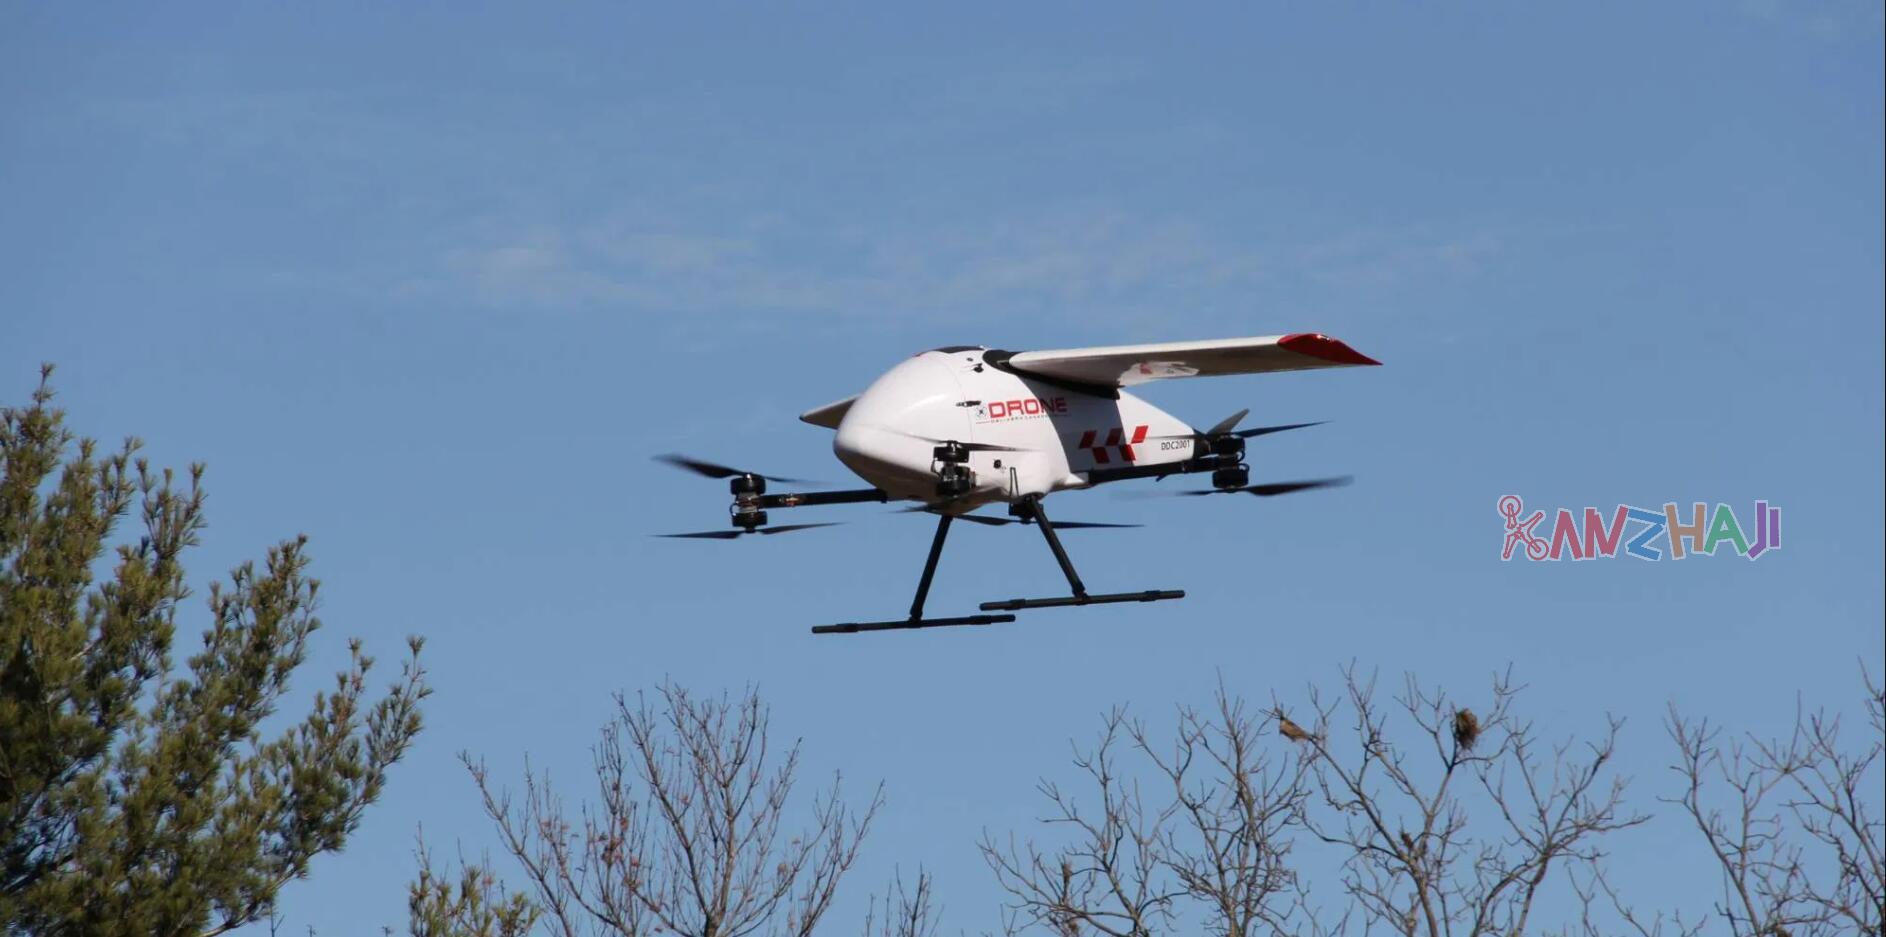 Drone Delivery Canada (DDC)公布Robin XL测试的更新